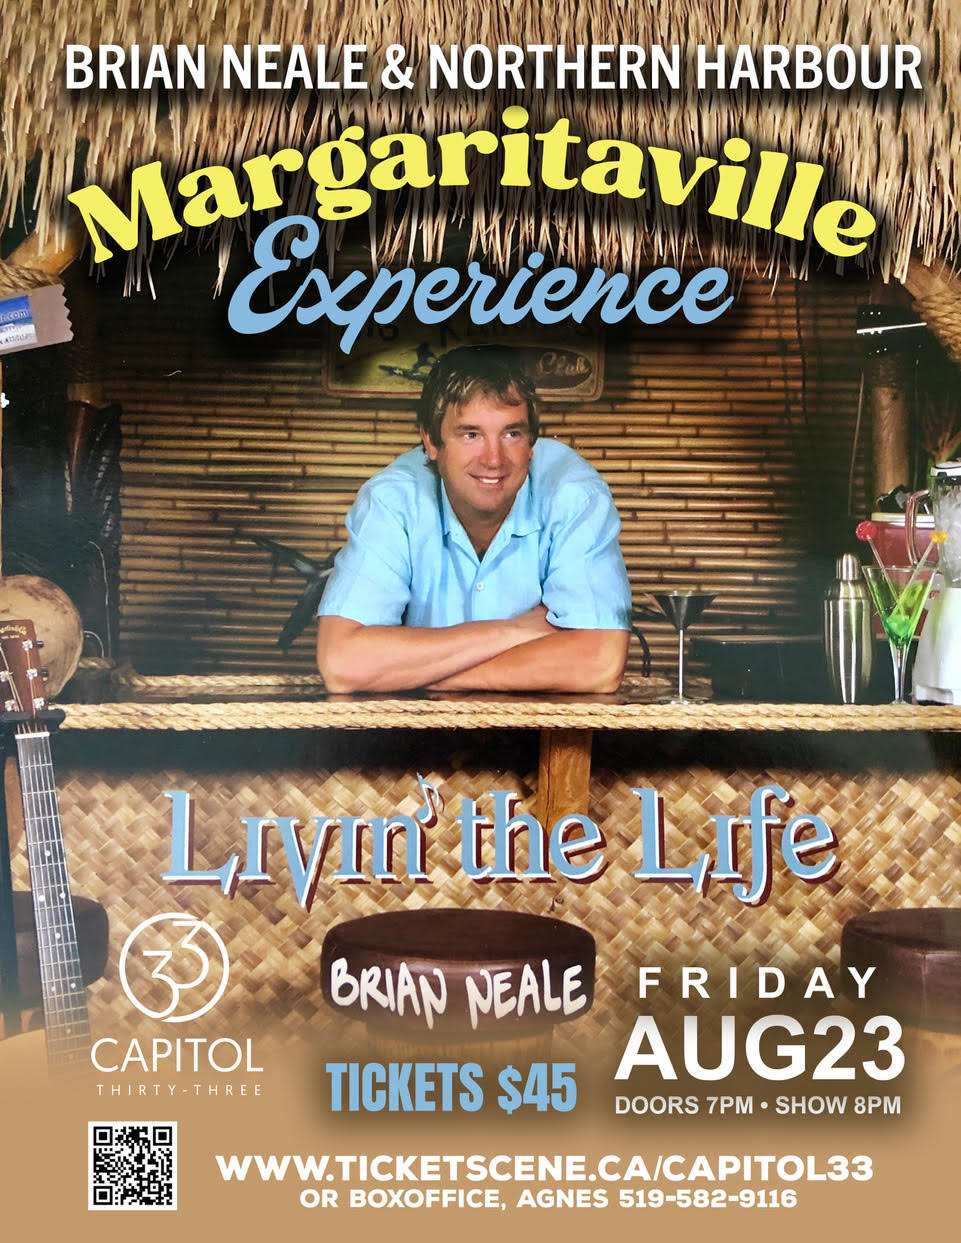 Margaritaville Experience